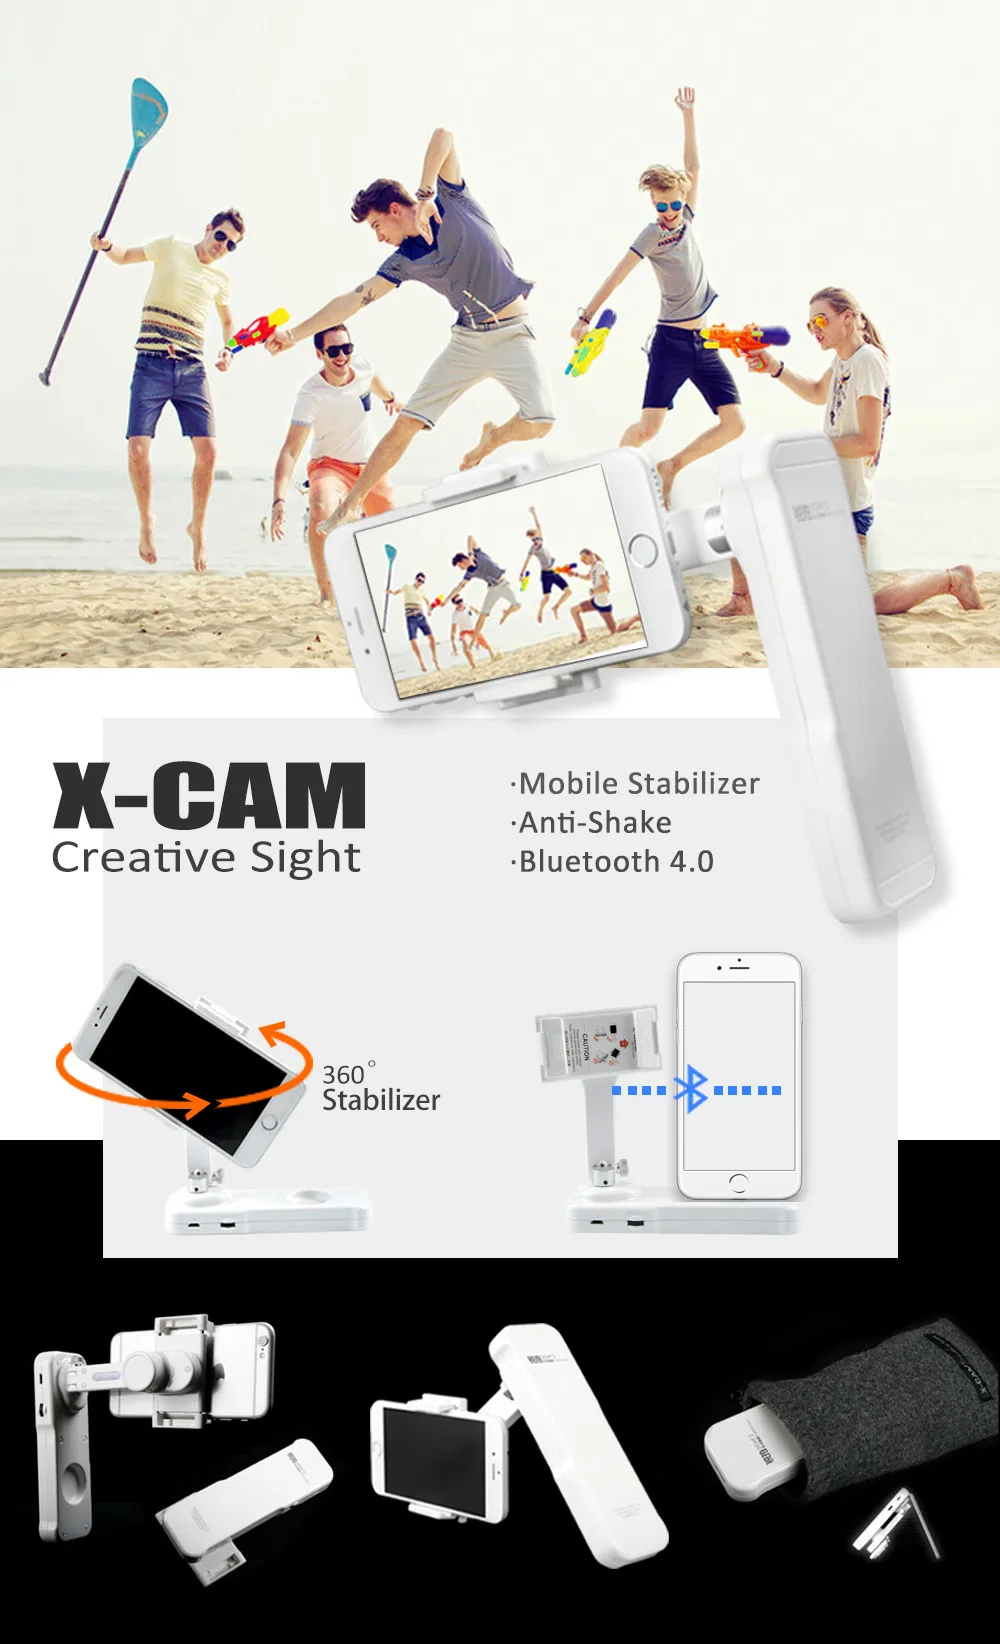 Orsda X-Cam стабилизатор zhiyun smooth для телефона стабилизатор dji osmo pocket snoppa atom стабилизатор для телефона samsung бесщеточный Bluetooth Управление для iPhone 6s плюс samsung HUAWEI s8 iphone x